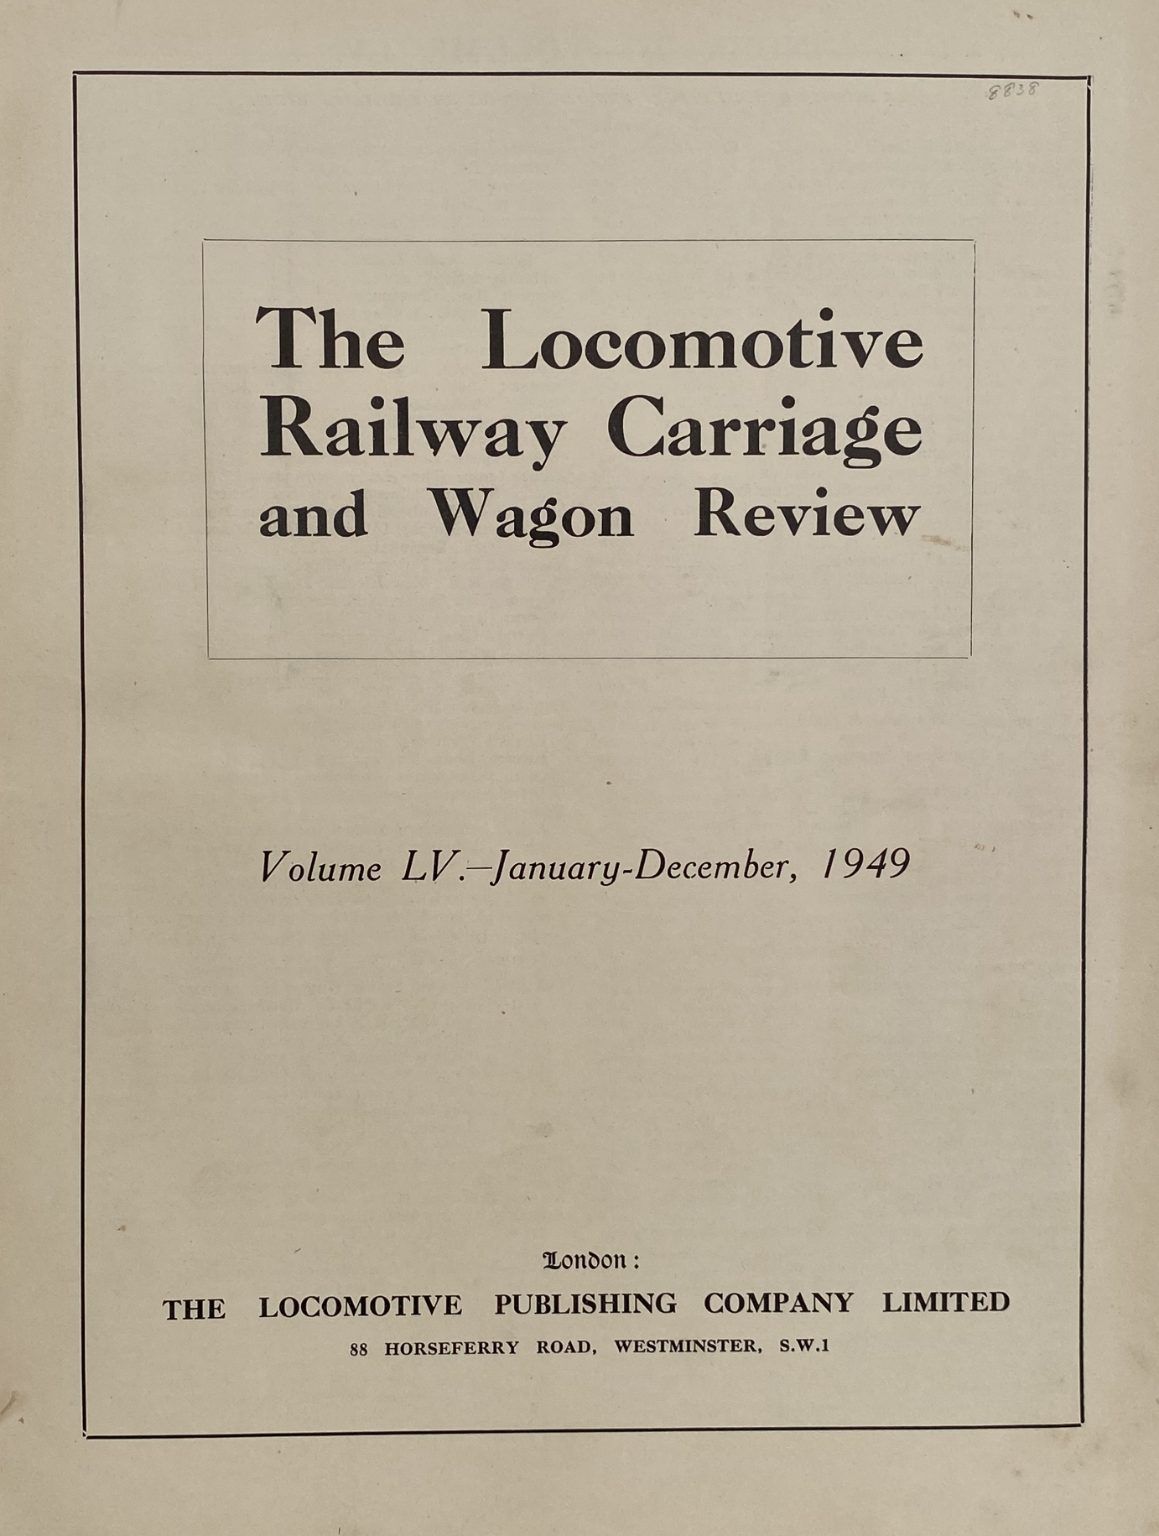 THE LOCOMOTIVE RAILWAY CARRIAGE & WAGON REVIEW - Volume LV